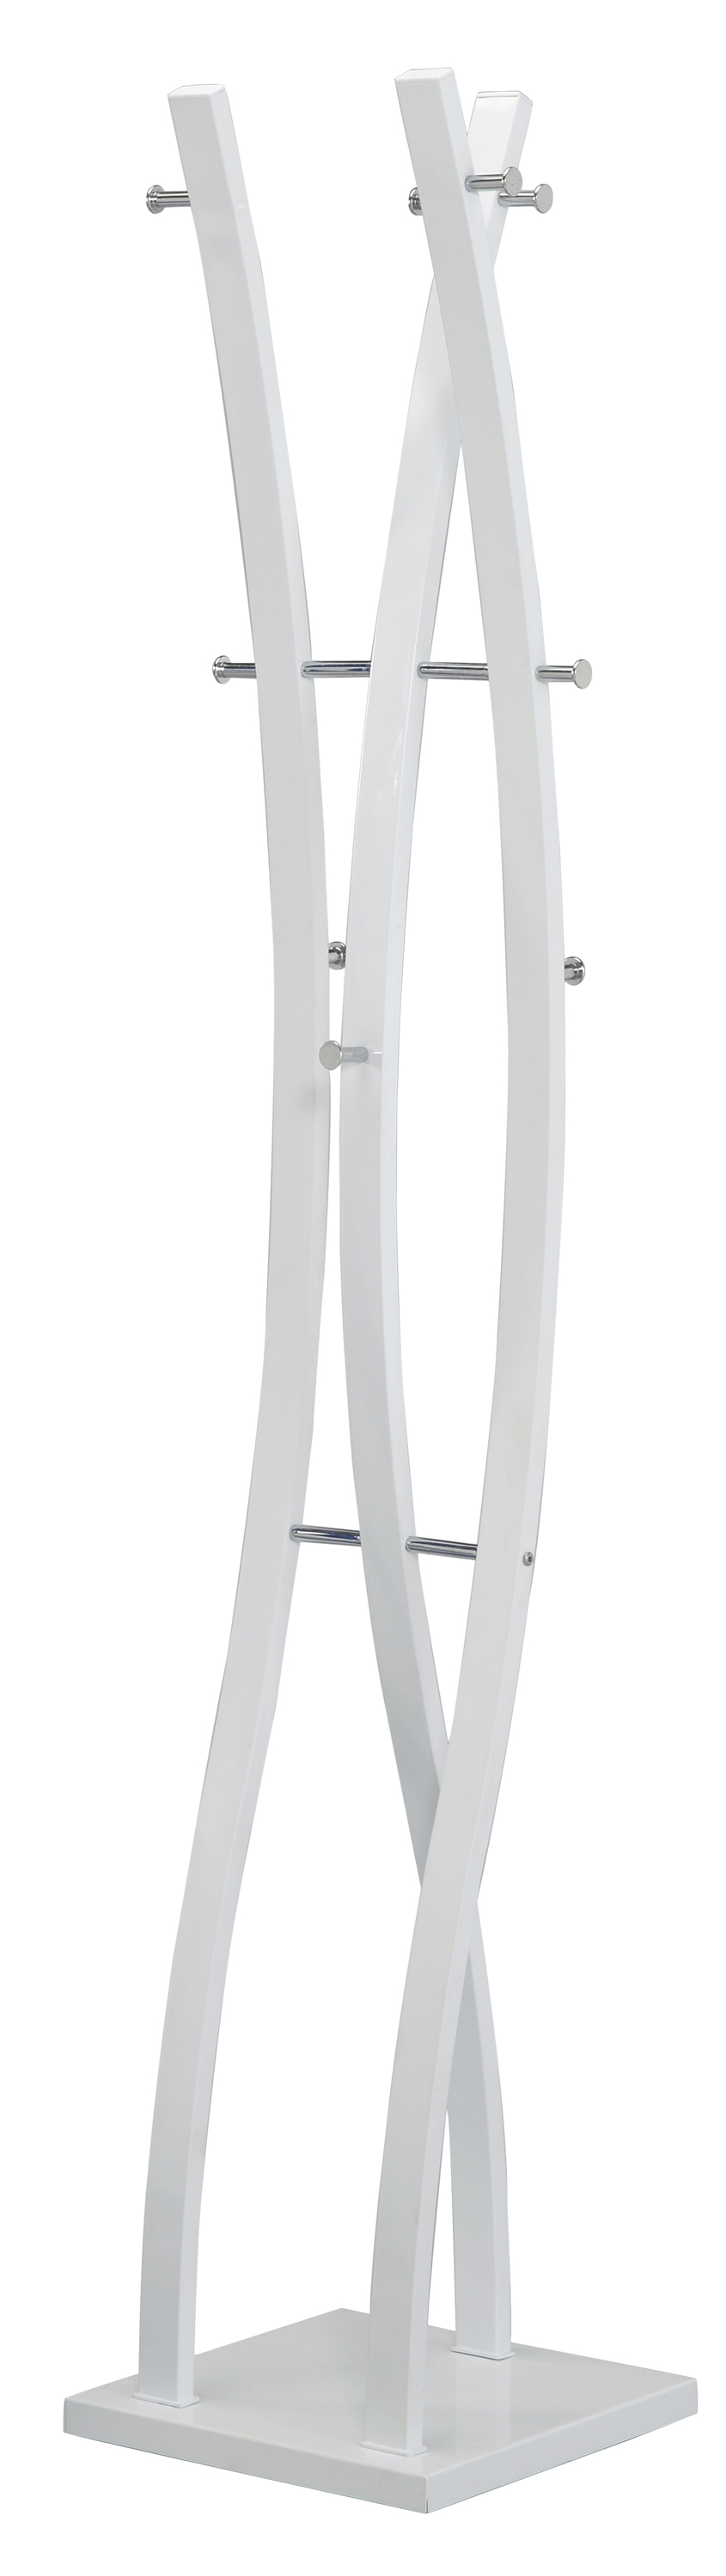 W50 hanger, color: white